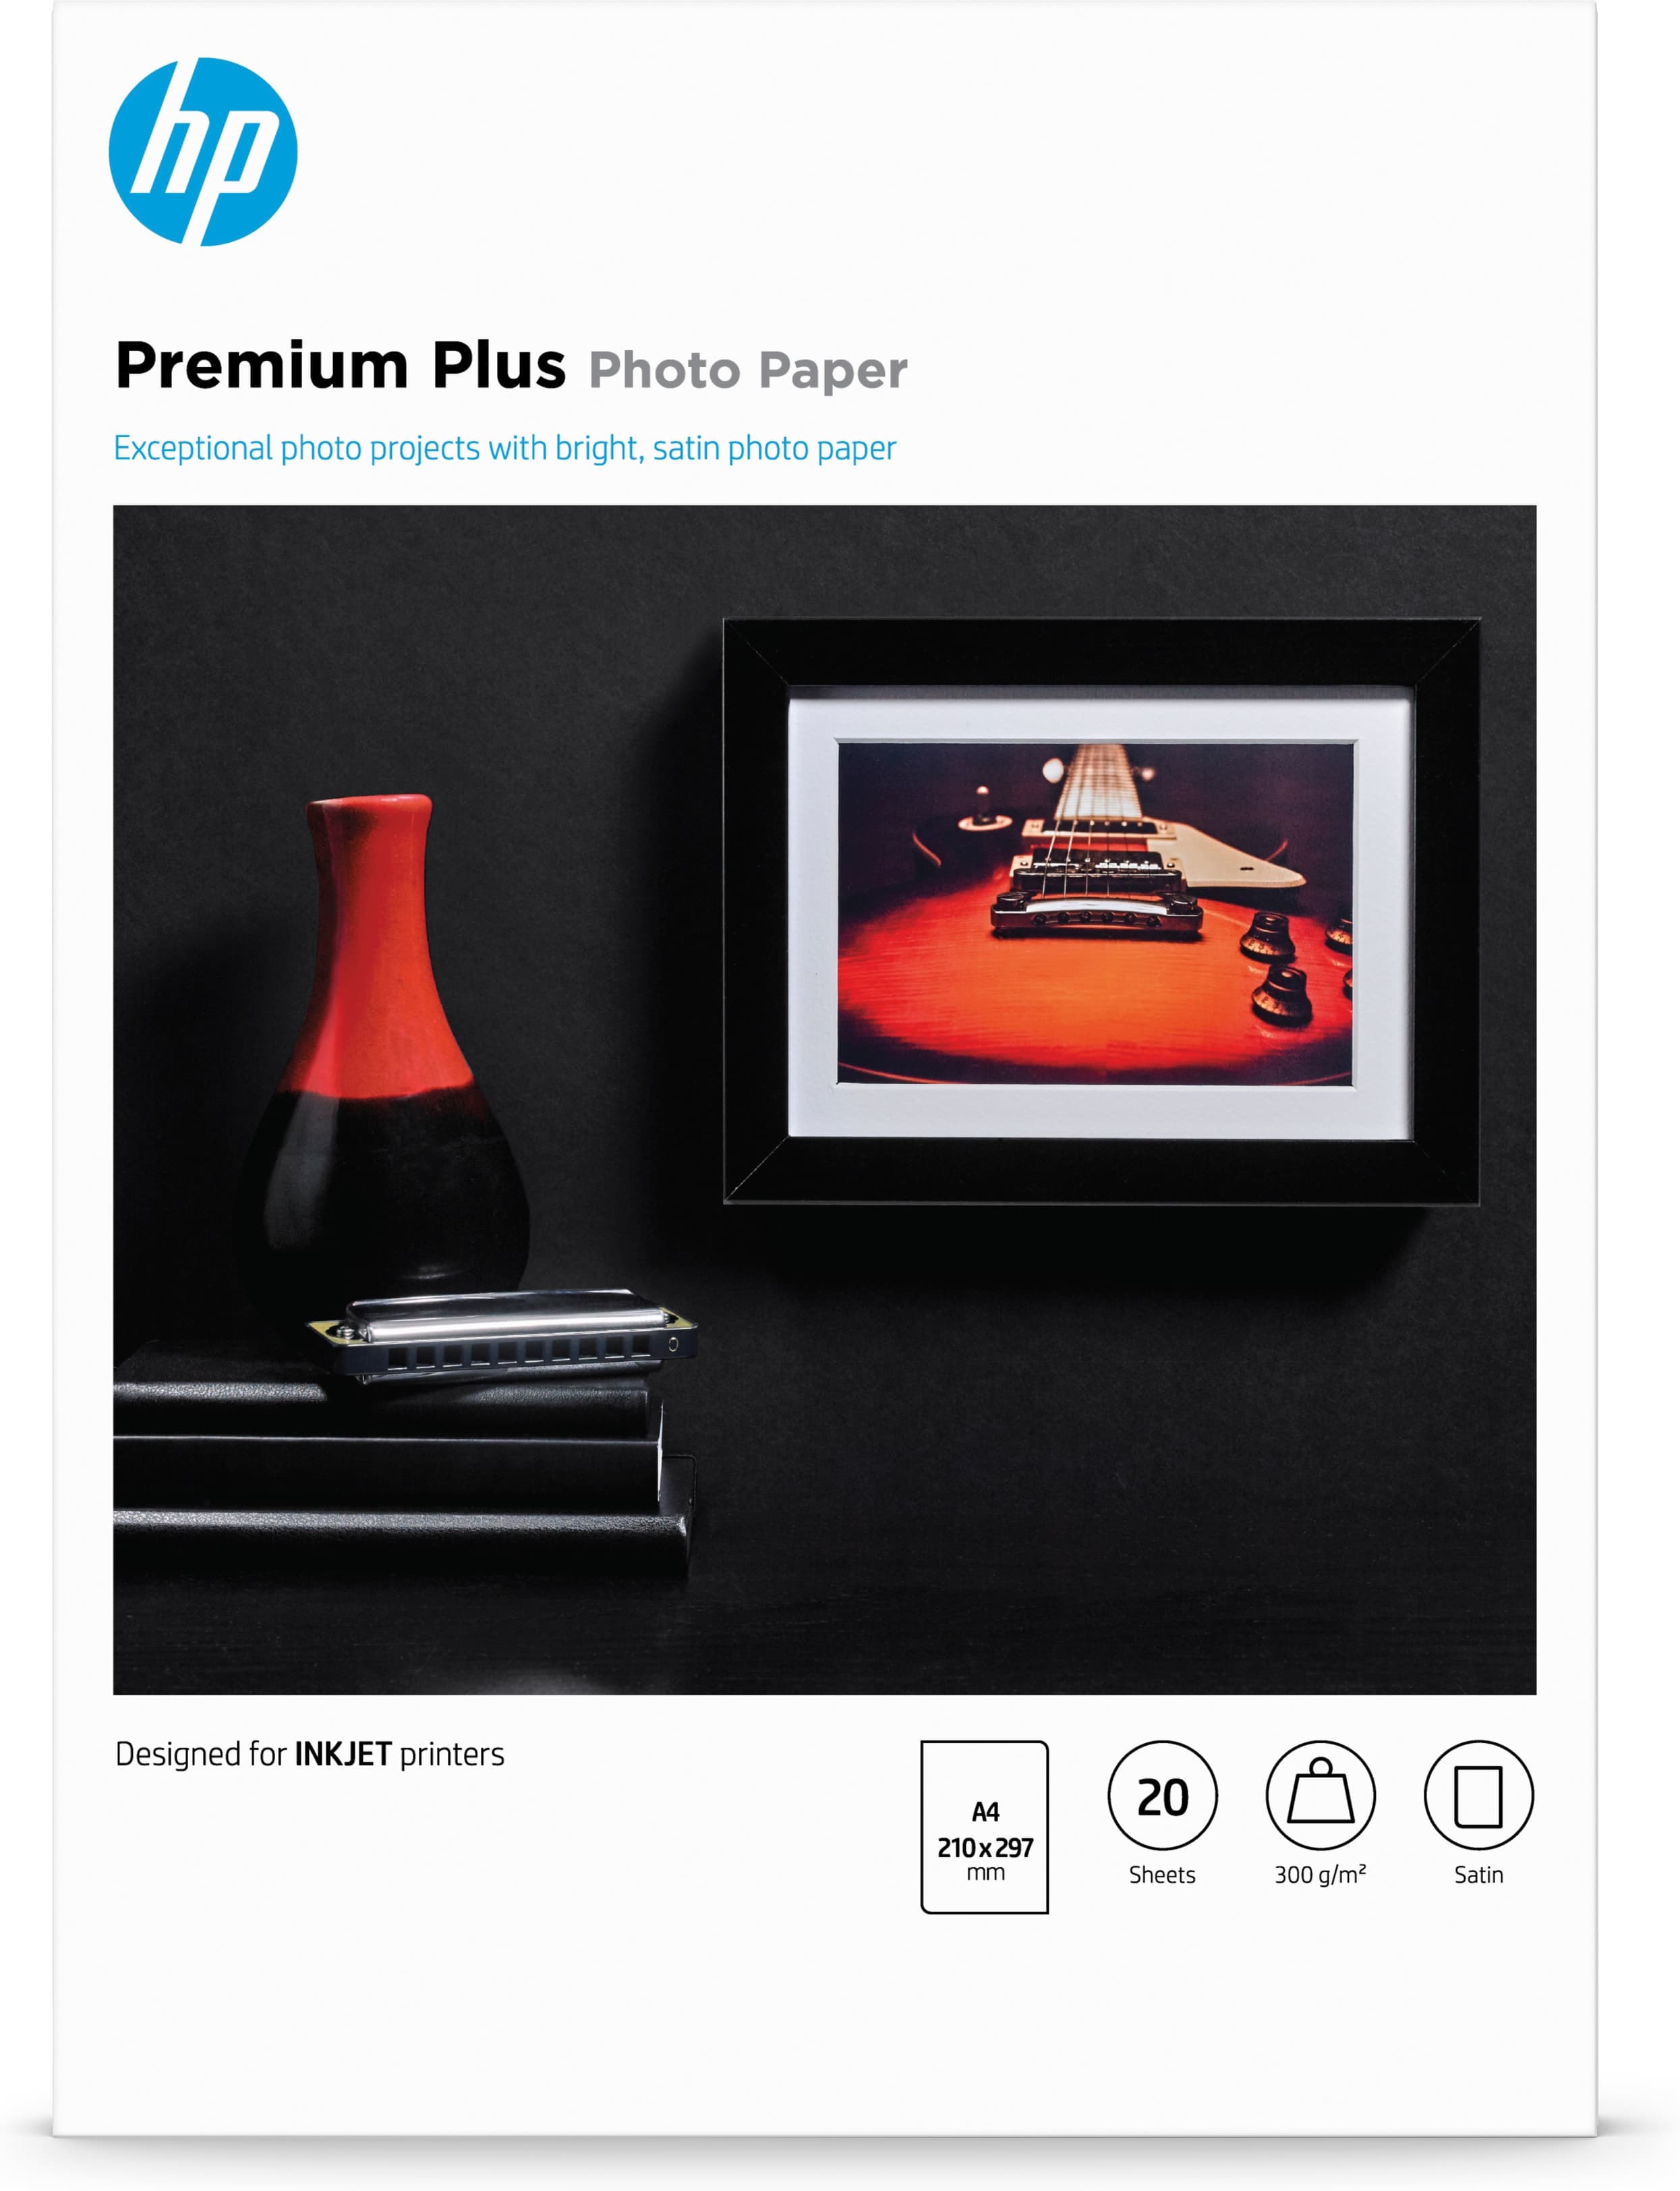 HP DeskJet Premium Plus Photo Paper A4 Foto-Papier - 300 g/m² - 210x297 mm - 20 Blatt